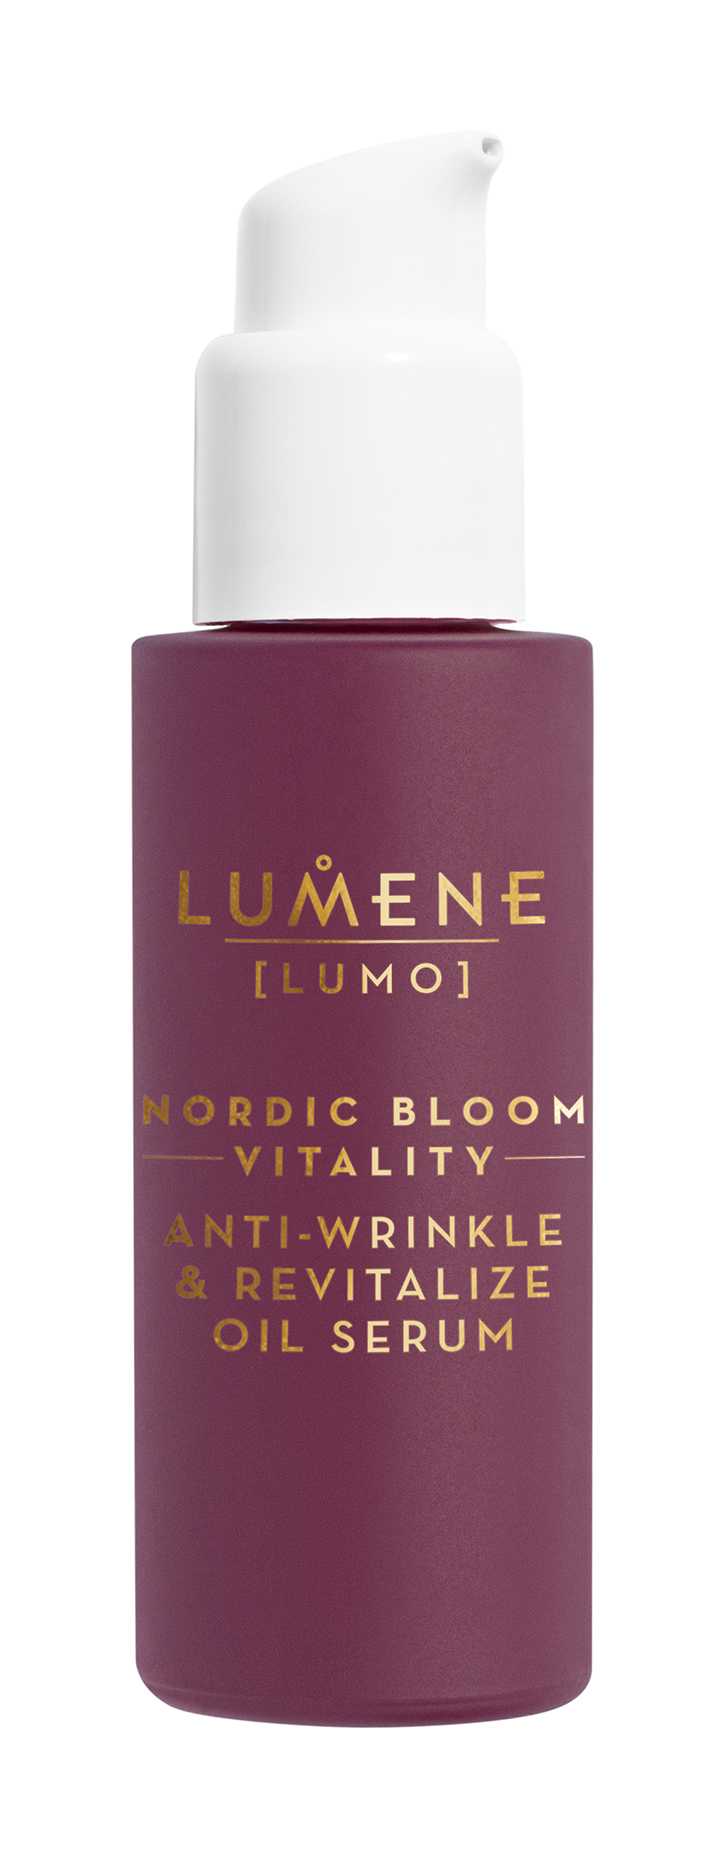 фото Lumene nordic bloom [lumo] vitality anti-wrinkle & revitalize oil serum